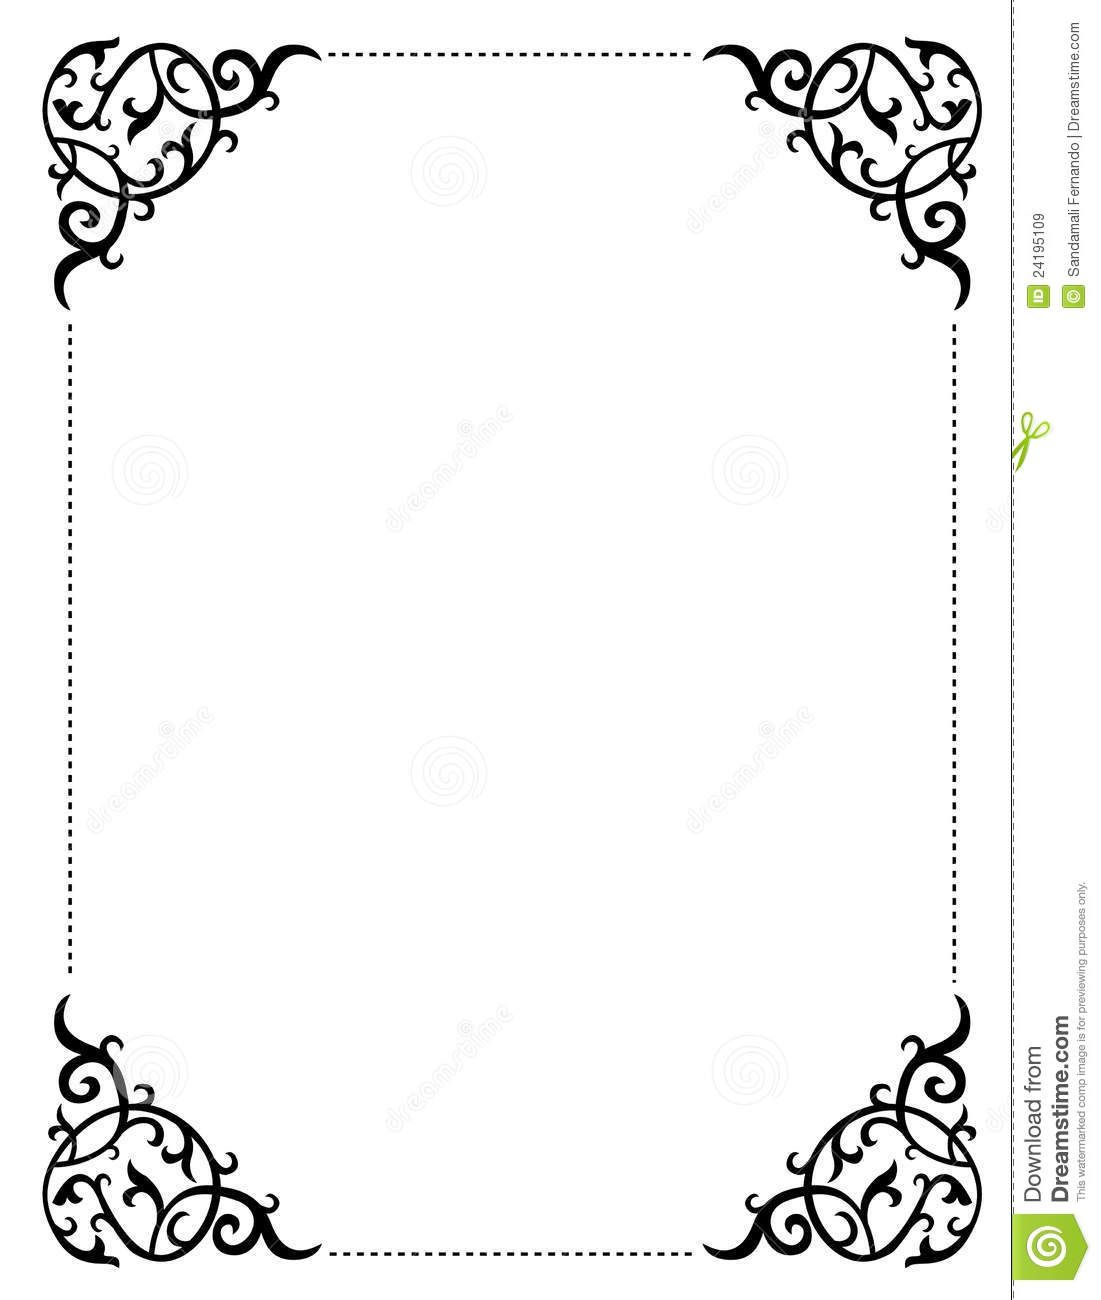 Free Printable Wedding Clip Art Borders And Backgrounds Invitation - Free Printable Wedding Scrolls